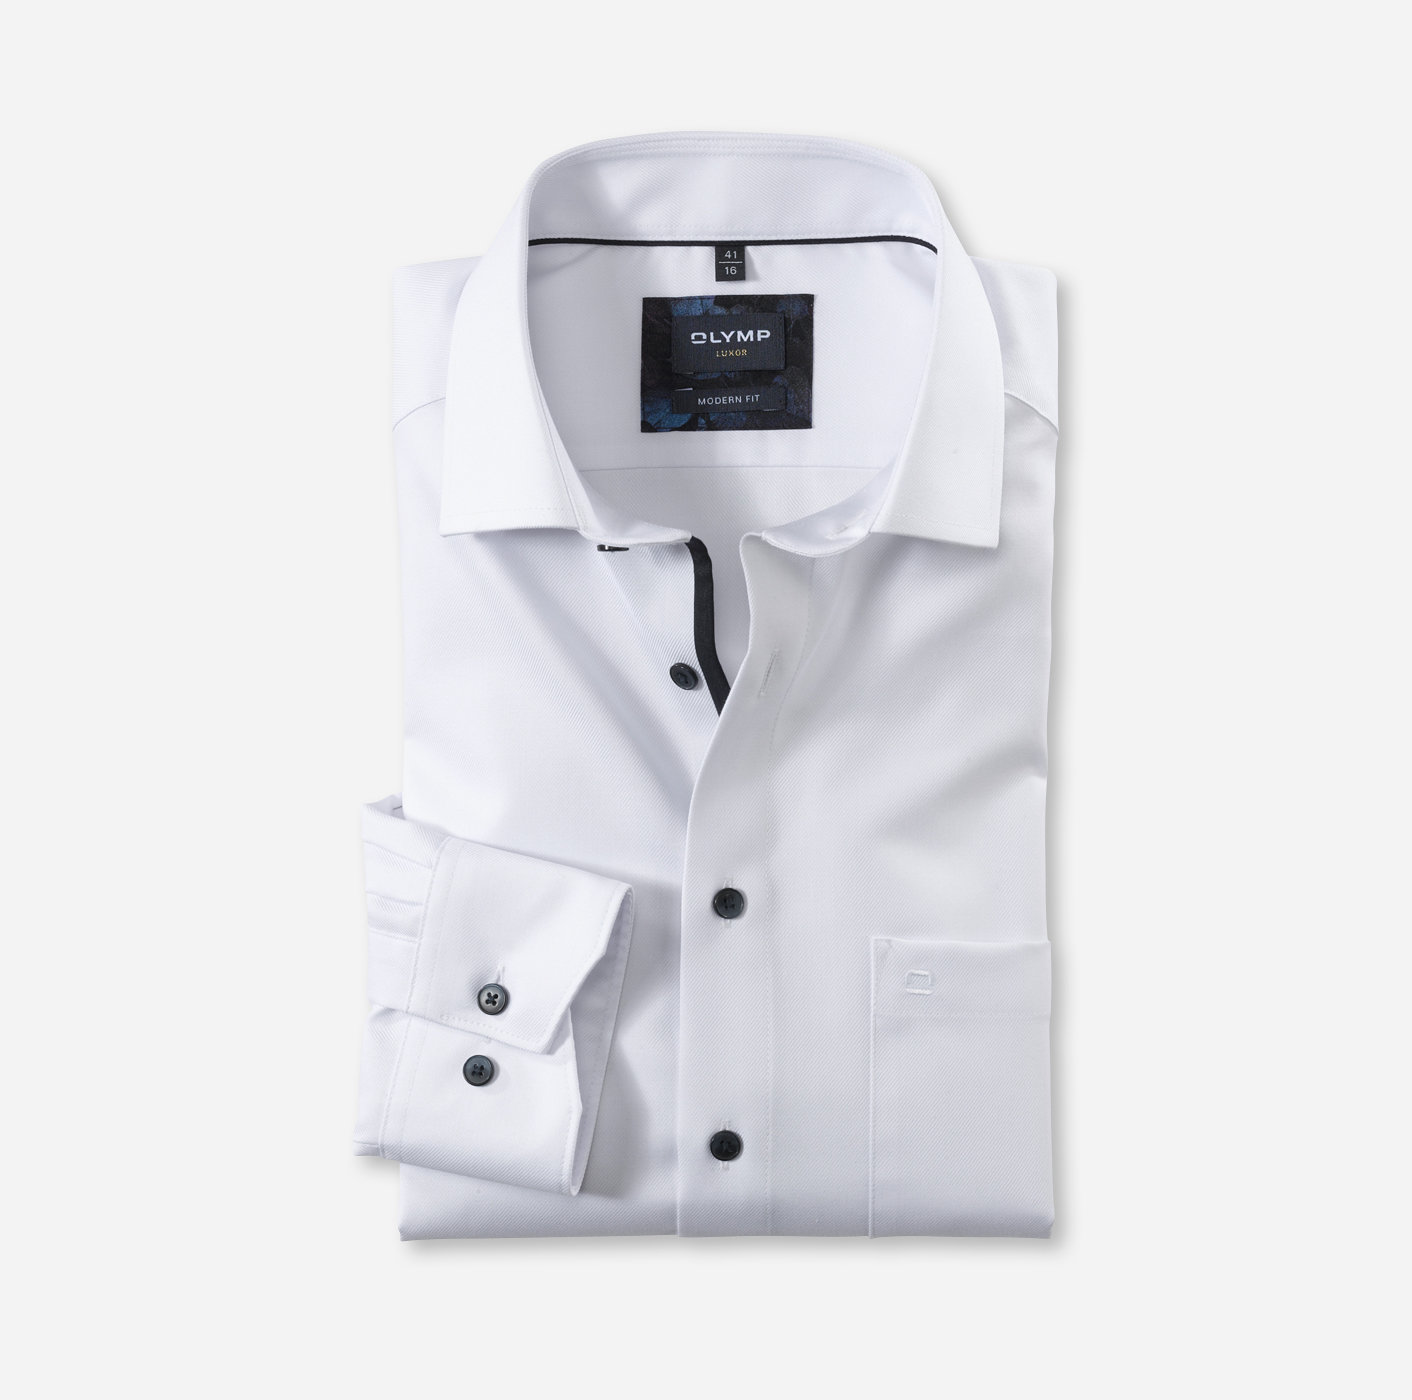 modern | Global | 12602800 Luxor, OLYMP Business White Kent - fit, shirt